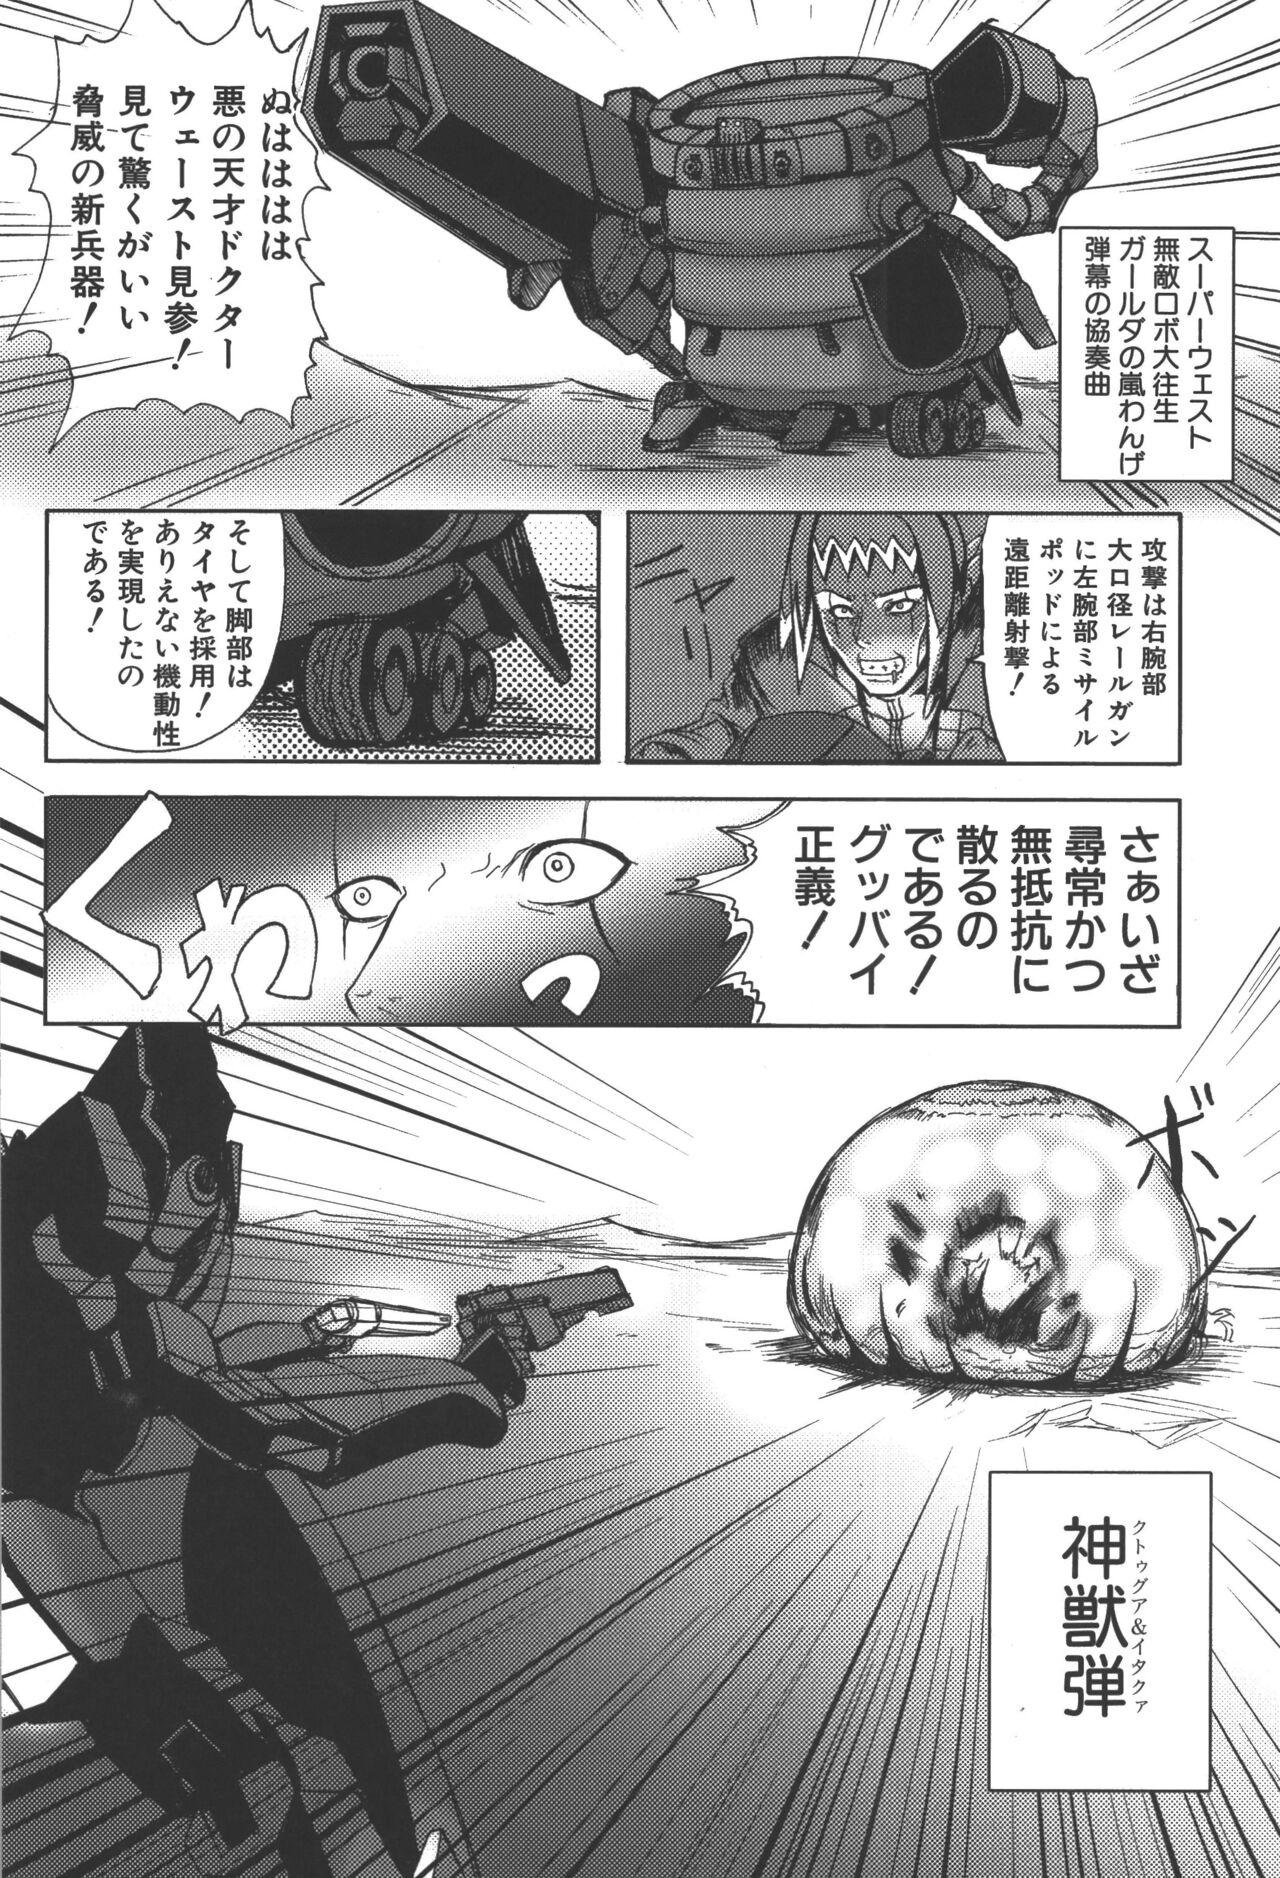 Zanma Taisei Demonbane Comic Anthology 2 10